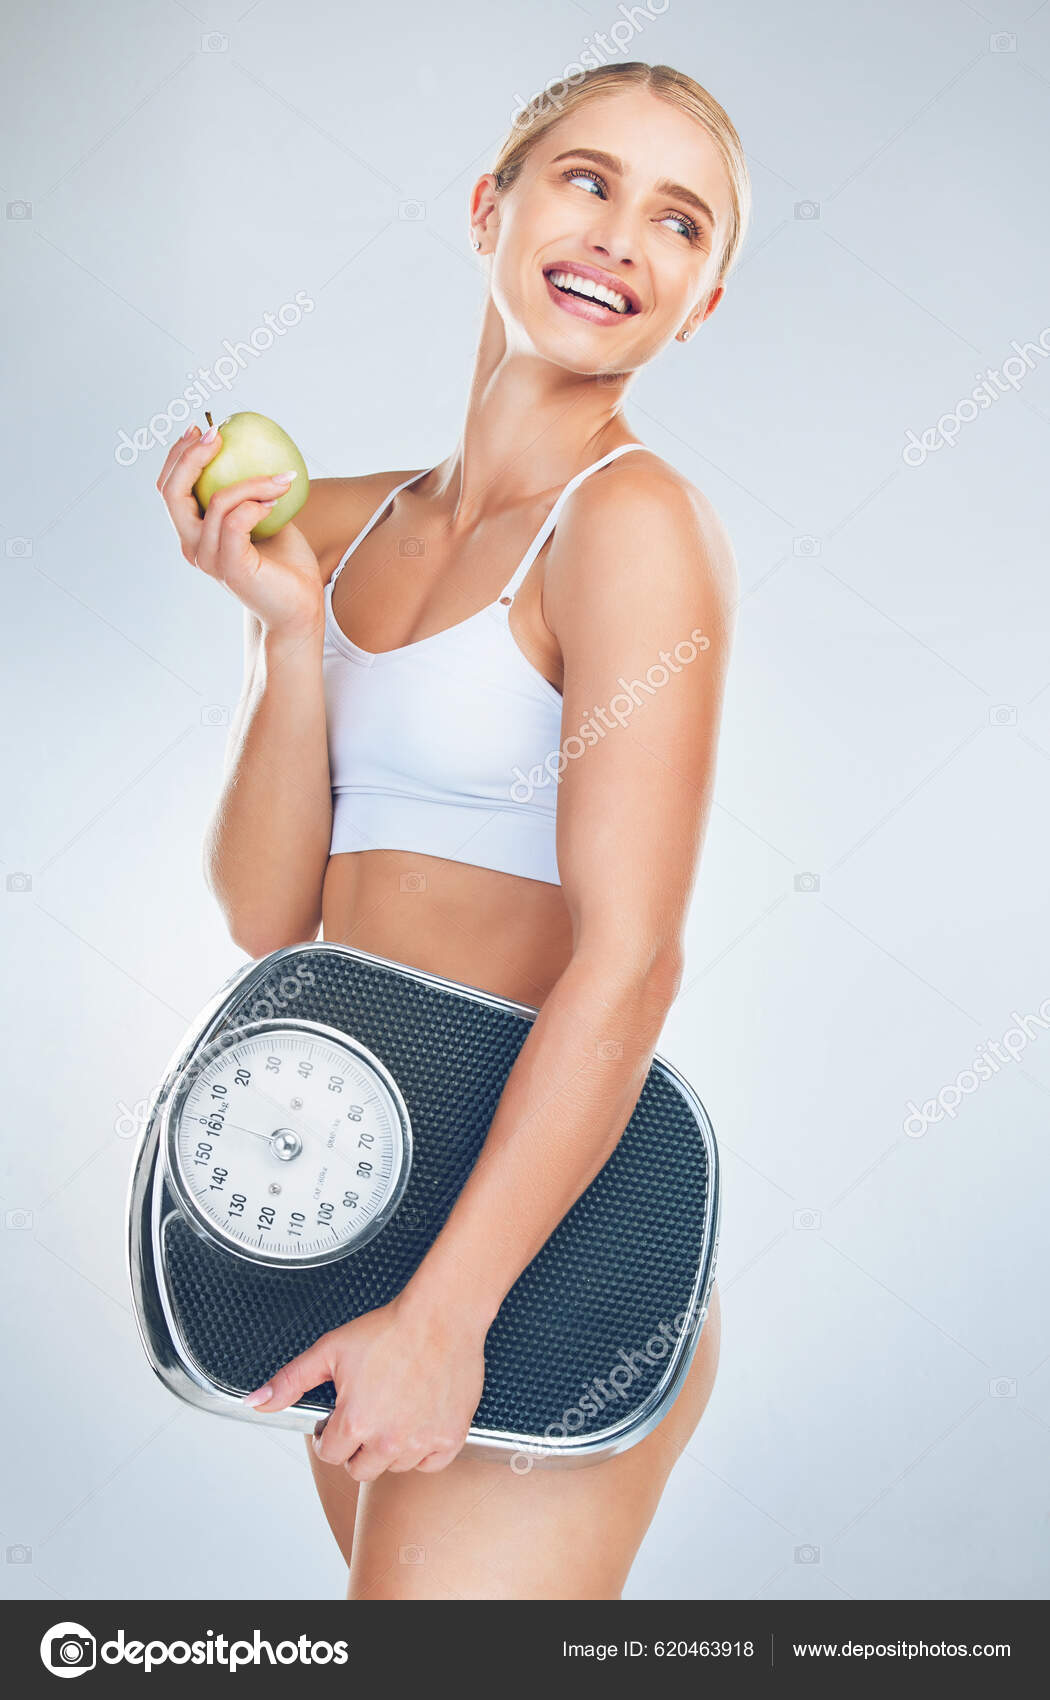 https://st5.depositphotos.com/62628780/62046/i/1600/depositphotos_620463918-stock-photo-apple-diet-woman-scale-body.jpg